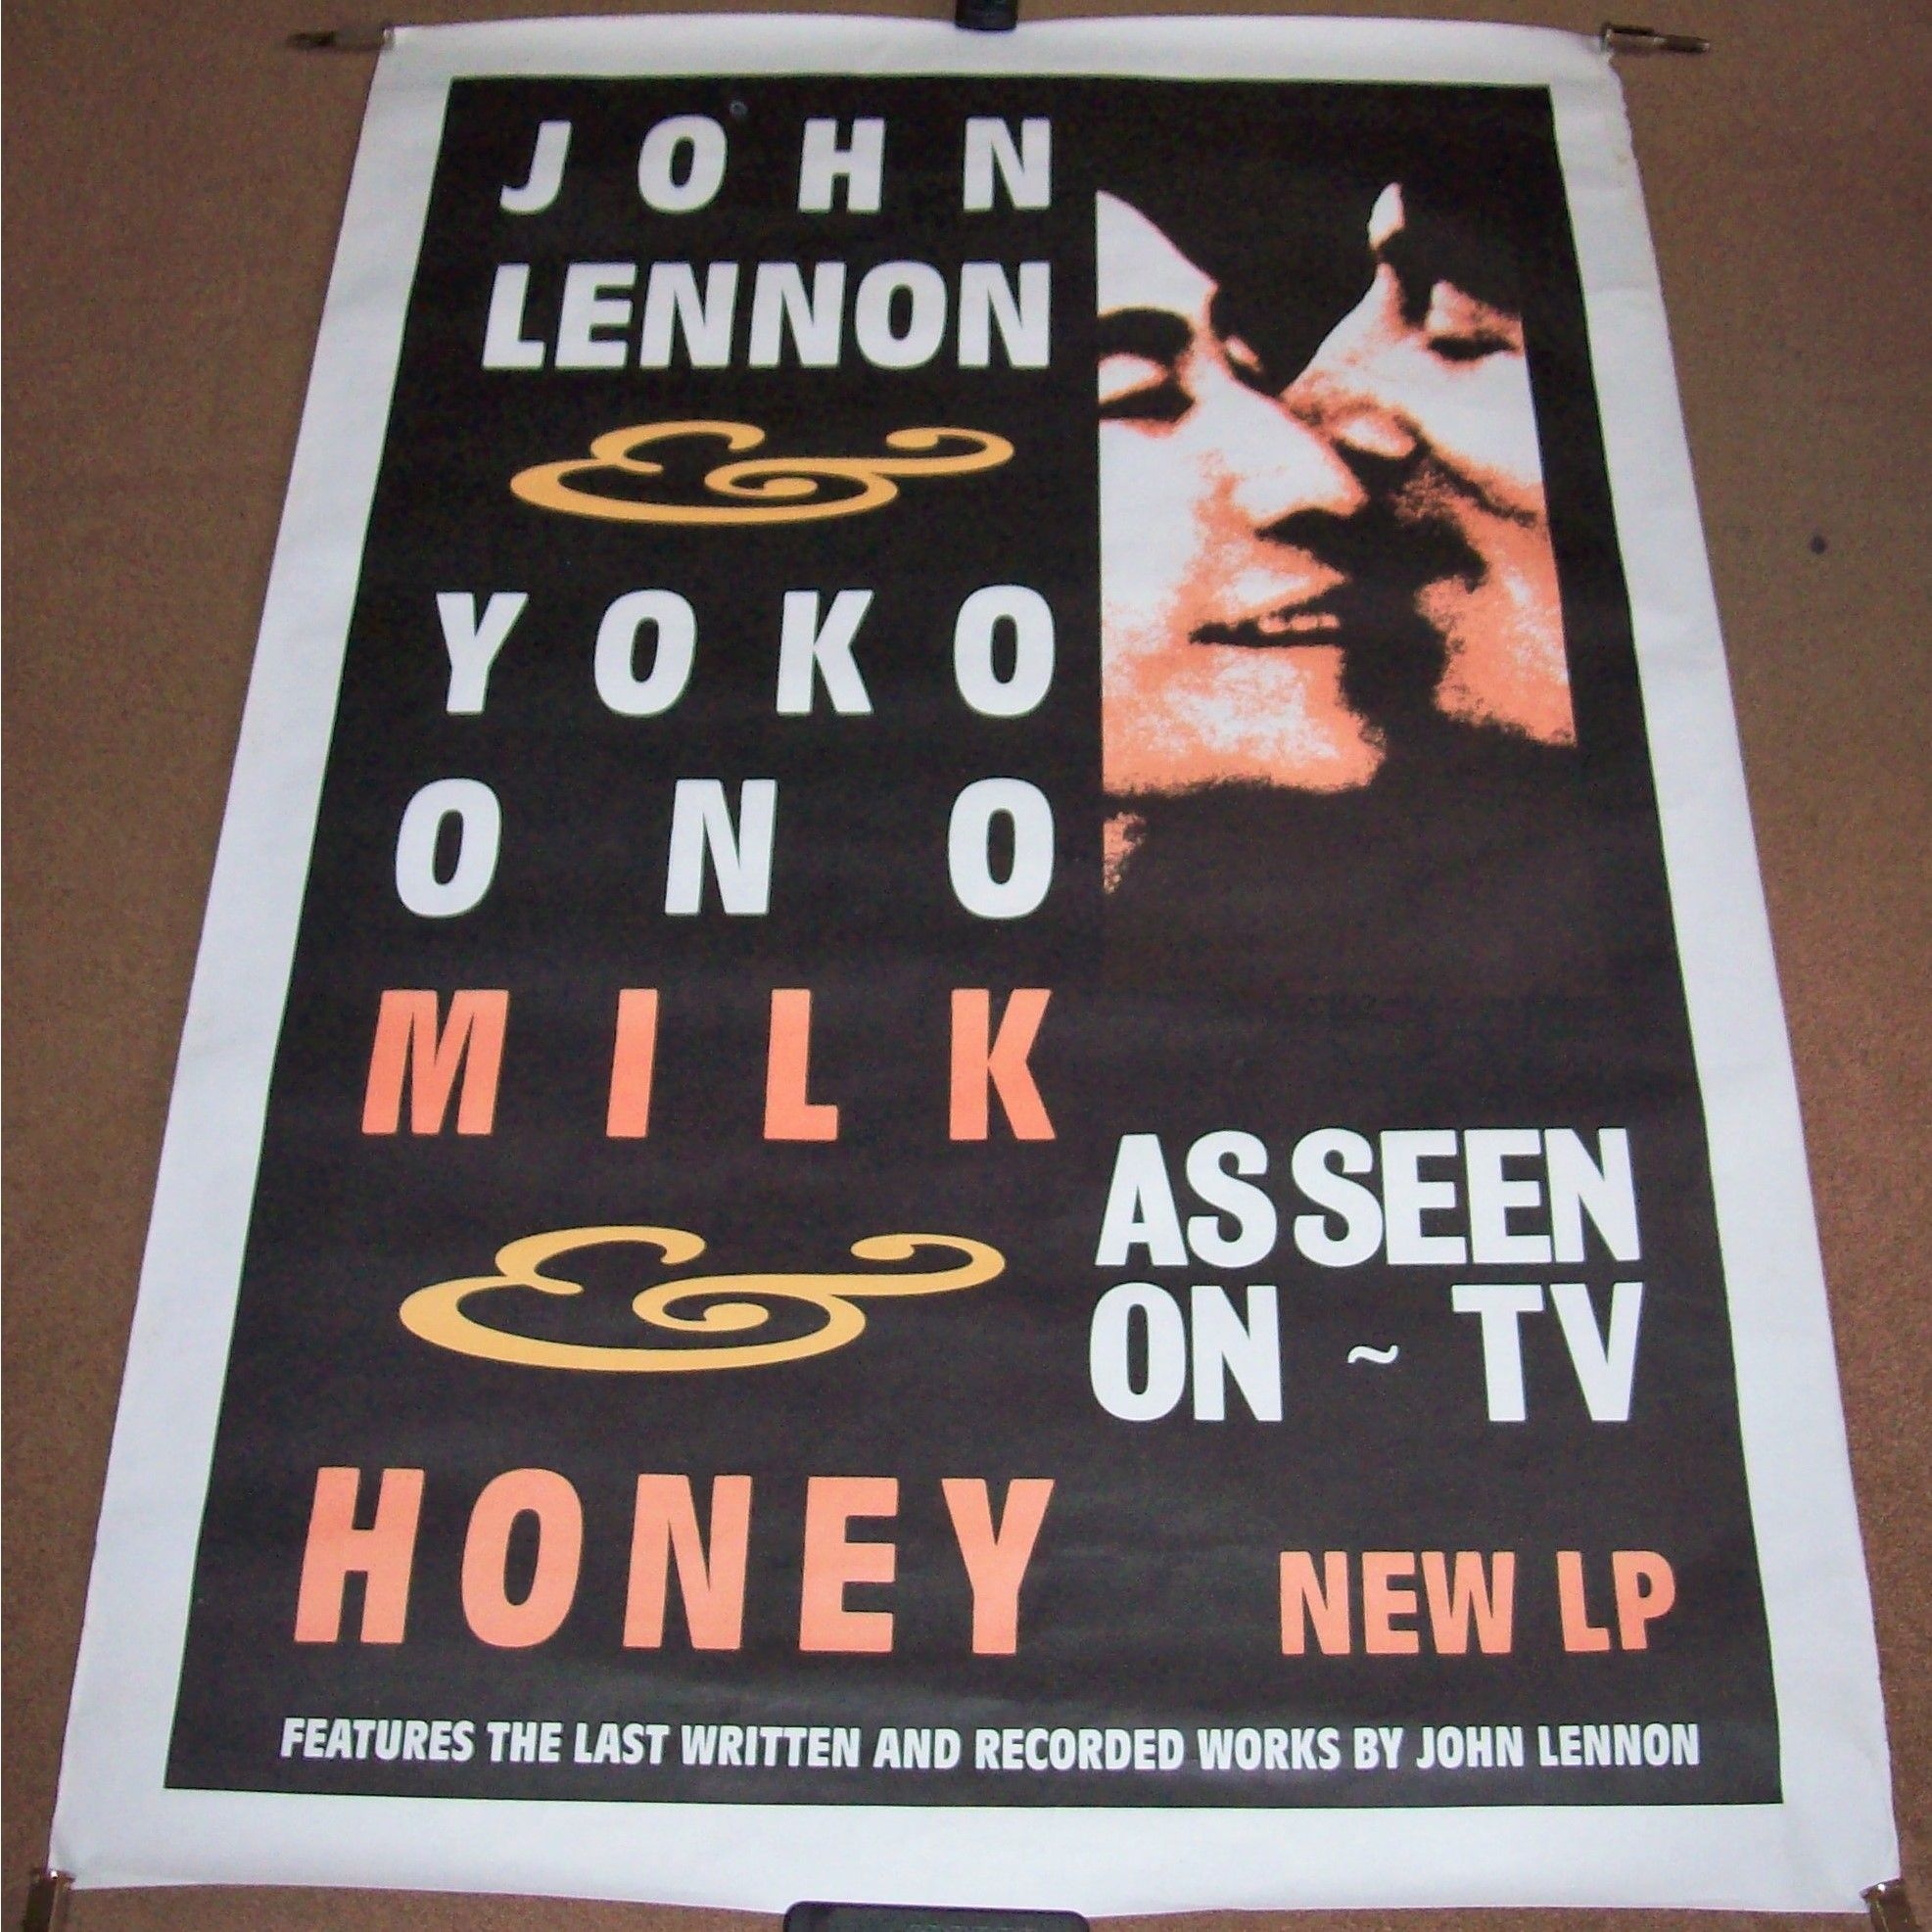 THE BEATLES JOHN LENNON U.K. RECORD COMPANY PROMO POSTER 'MILK AND HONEY' A